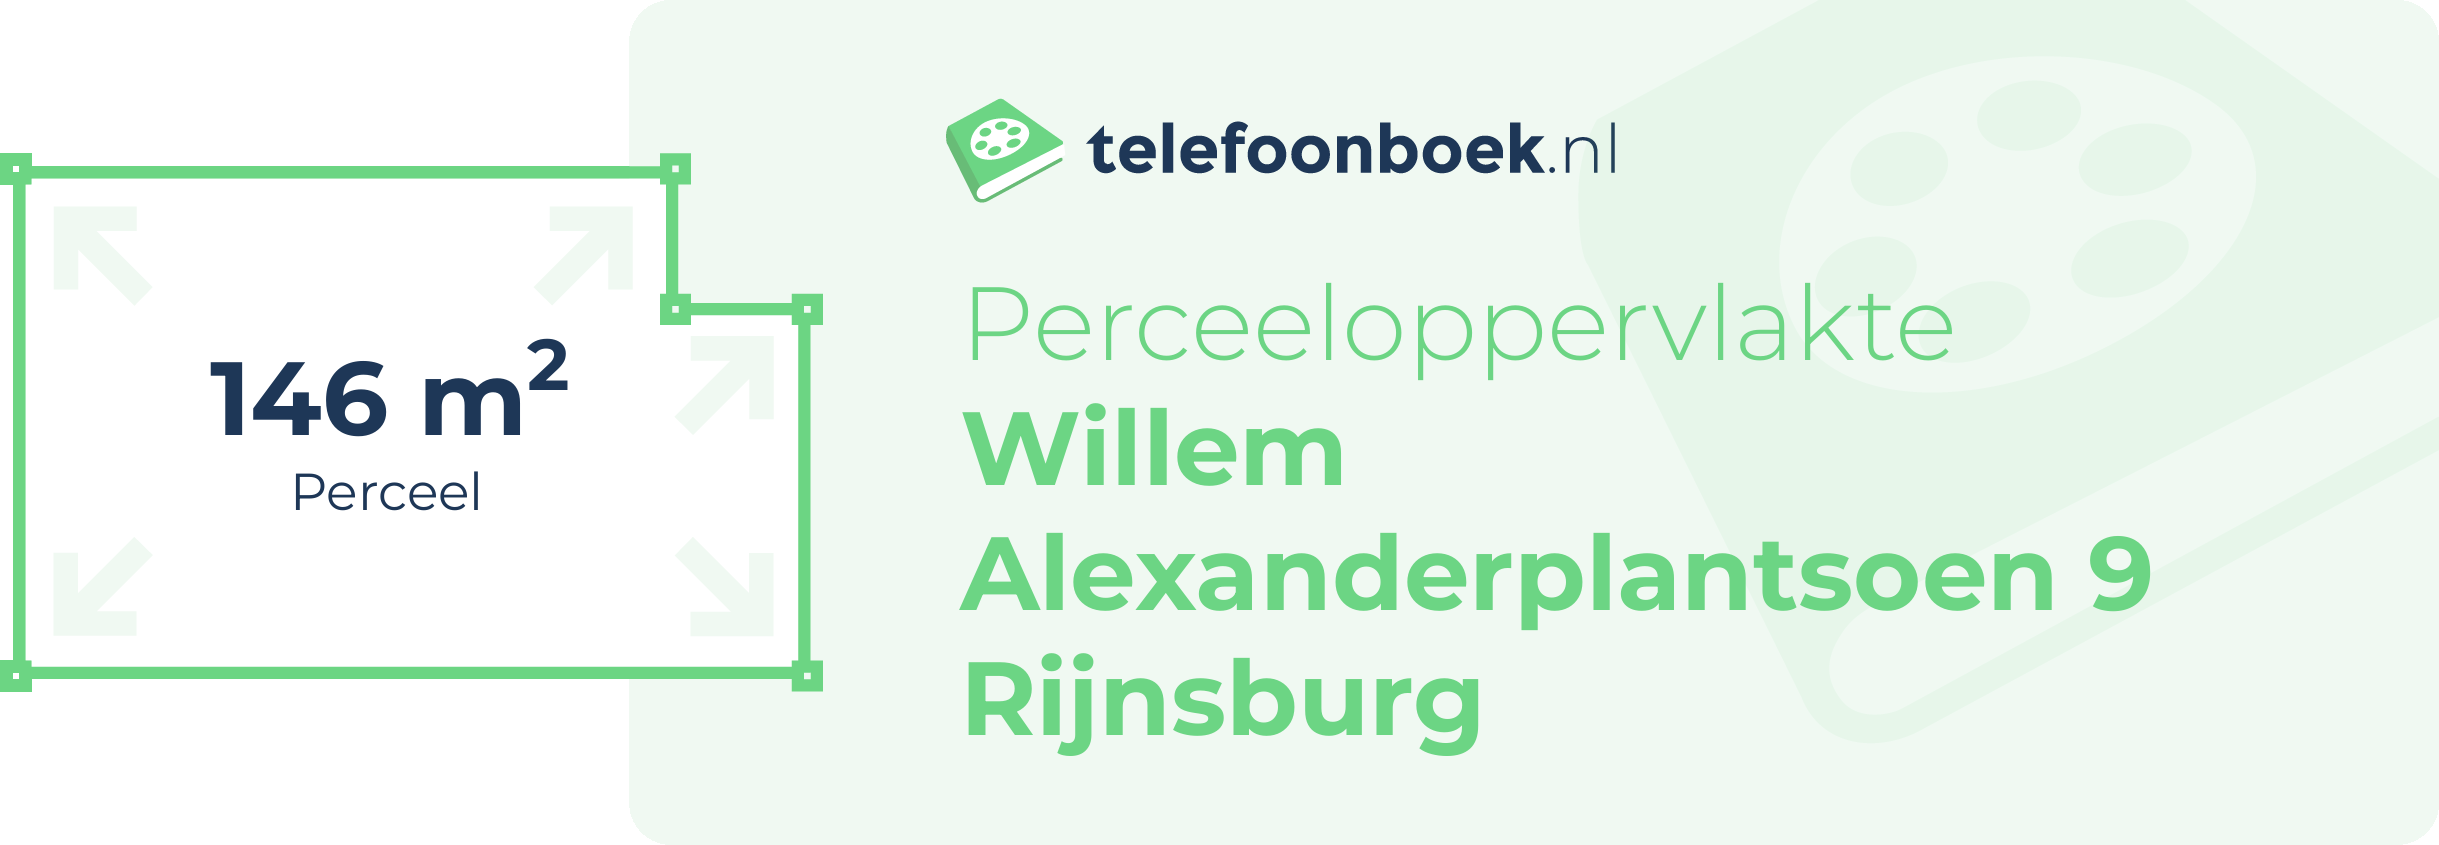 Perceeloppervlakte Willem Alexanderplantsoen 9 Rijnsburg